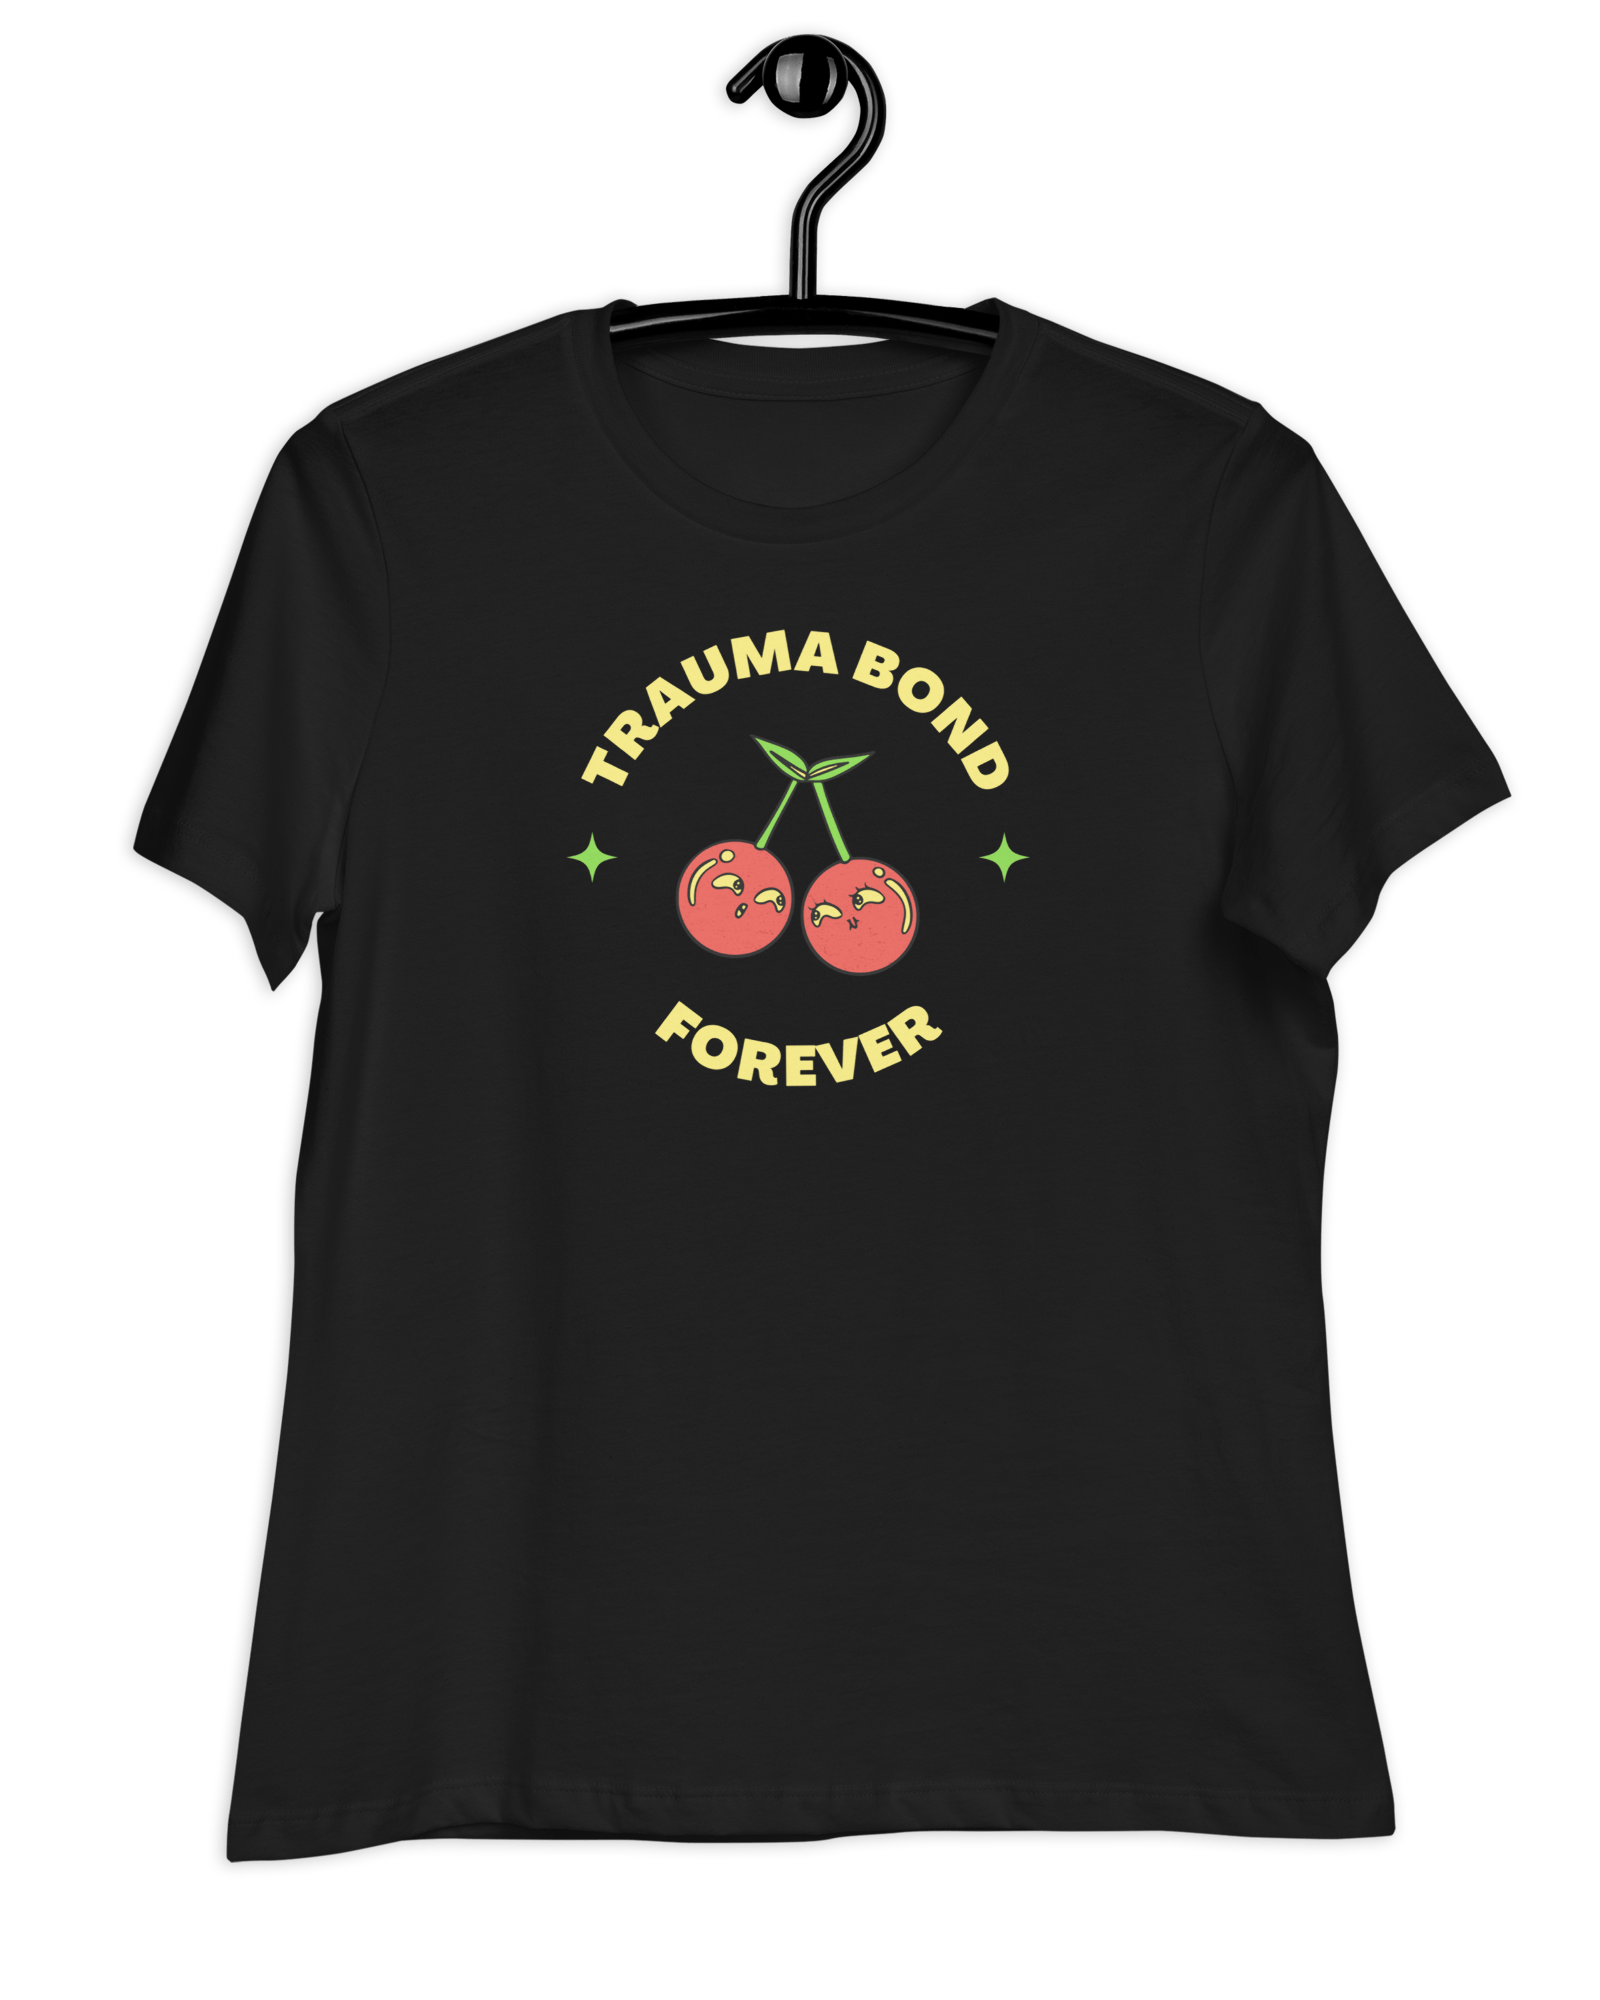 Trauma Bond Forever Women's Relaxed T-Shirt Black / S Shirts & Tops Jolly & Goode